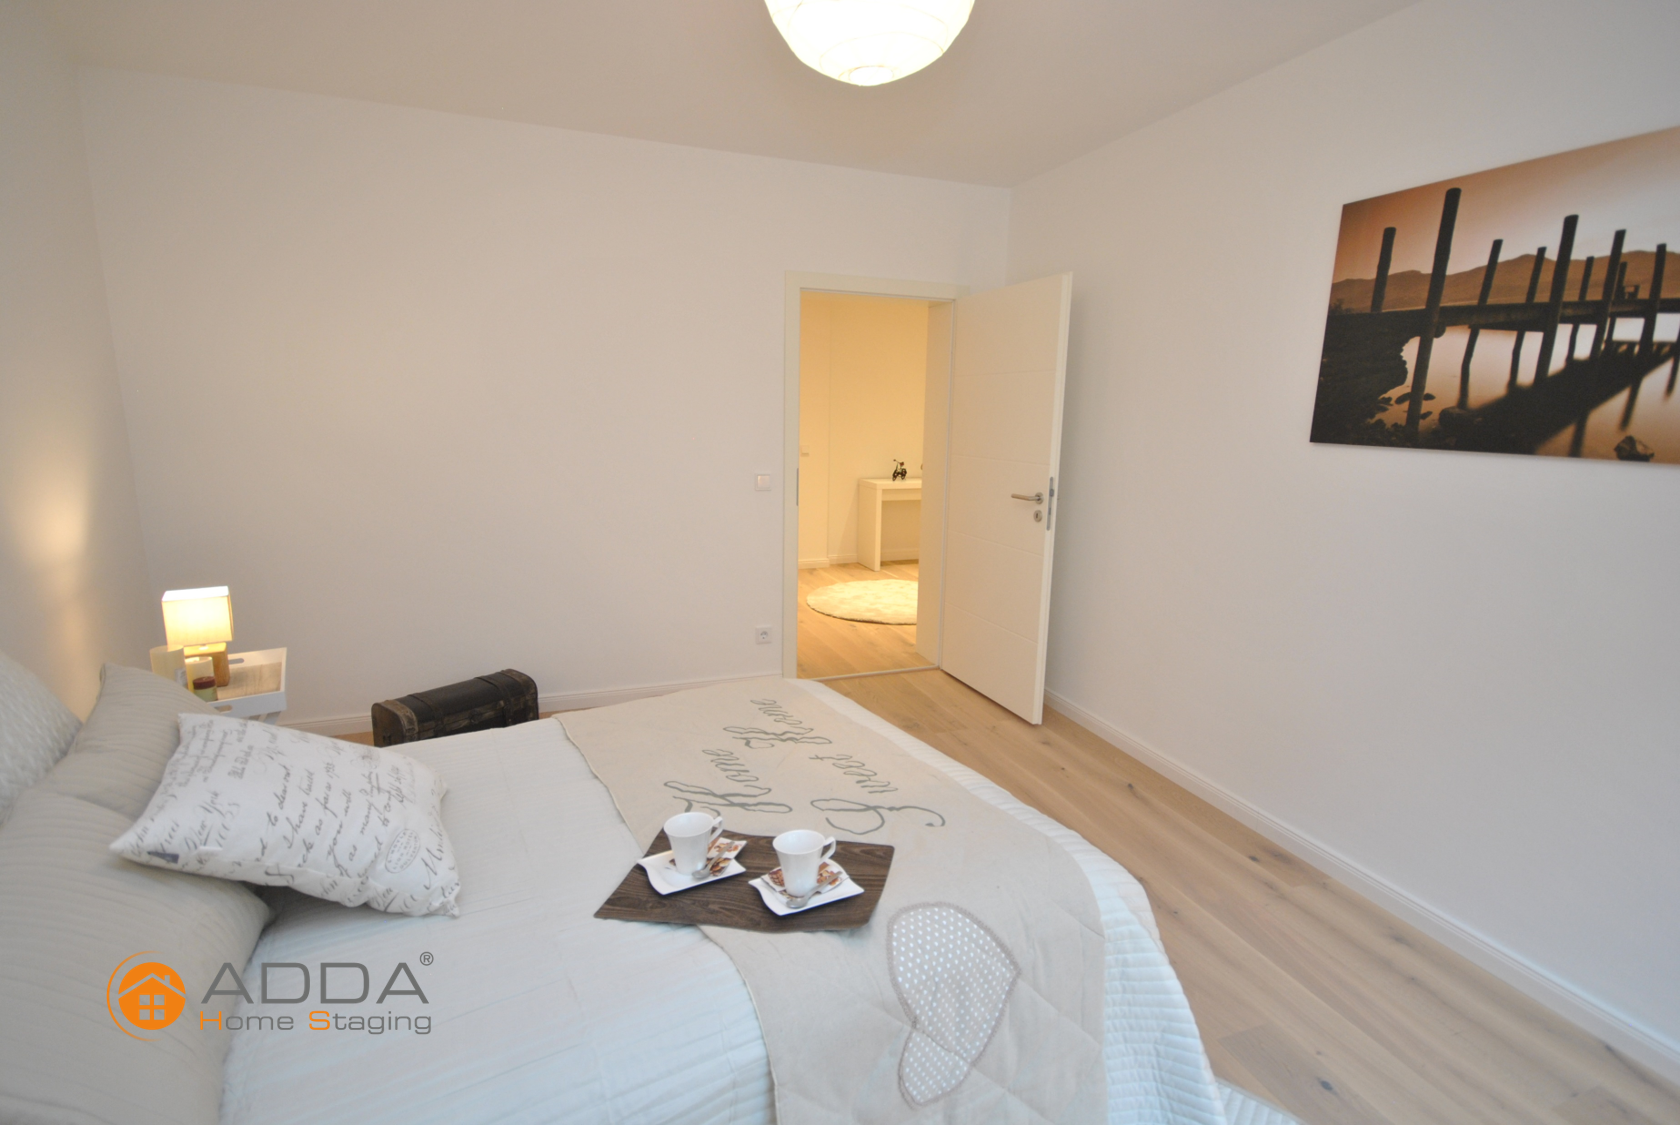 Schlafzimmer nach ADDA Homestaging #raumgestaltung ©ADDA Homestaging